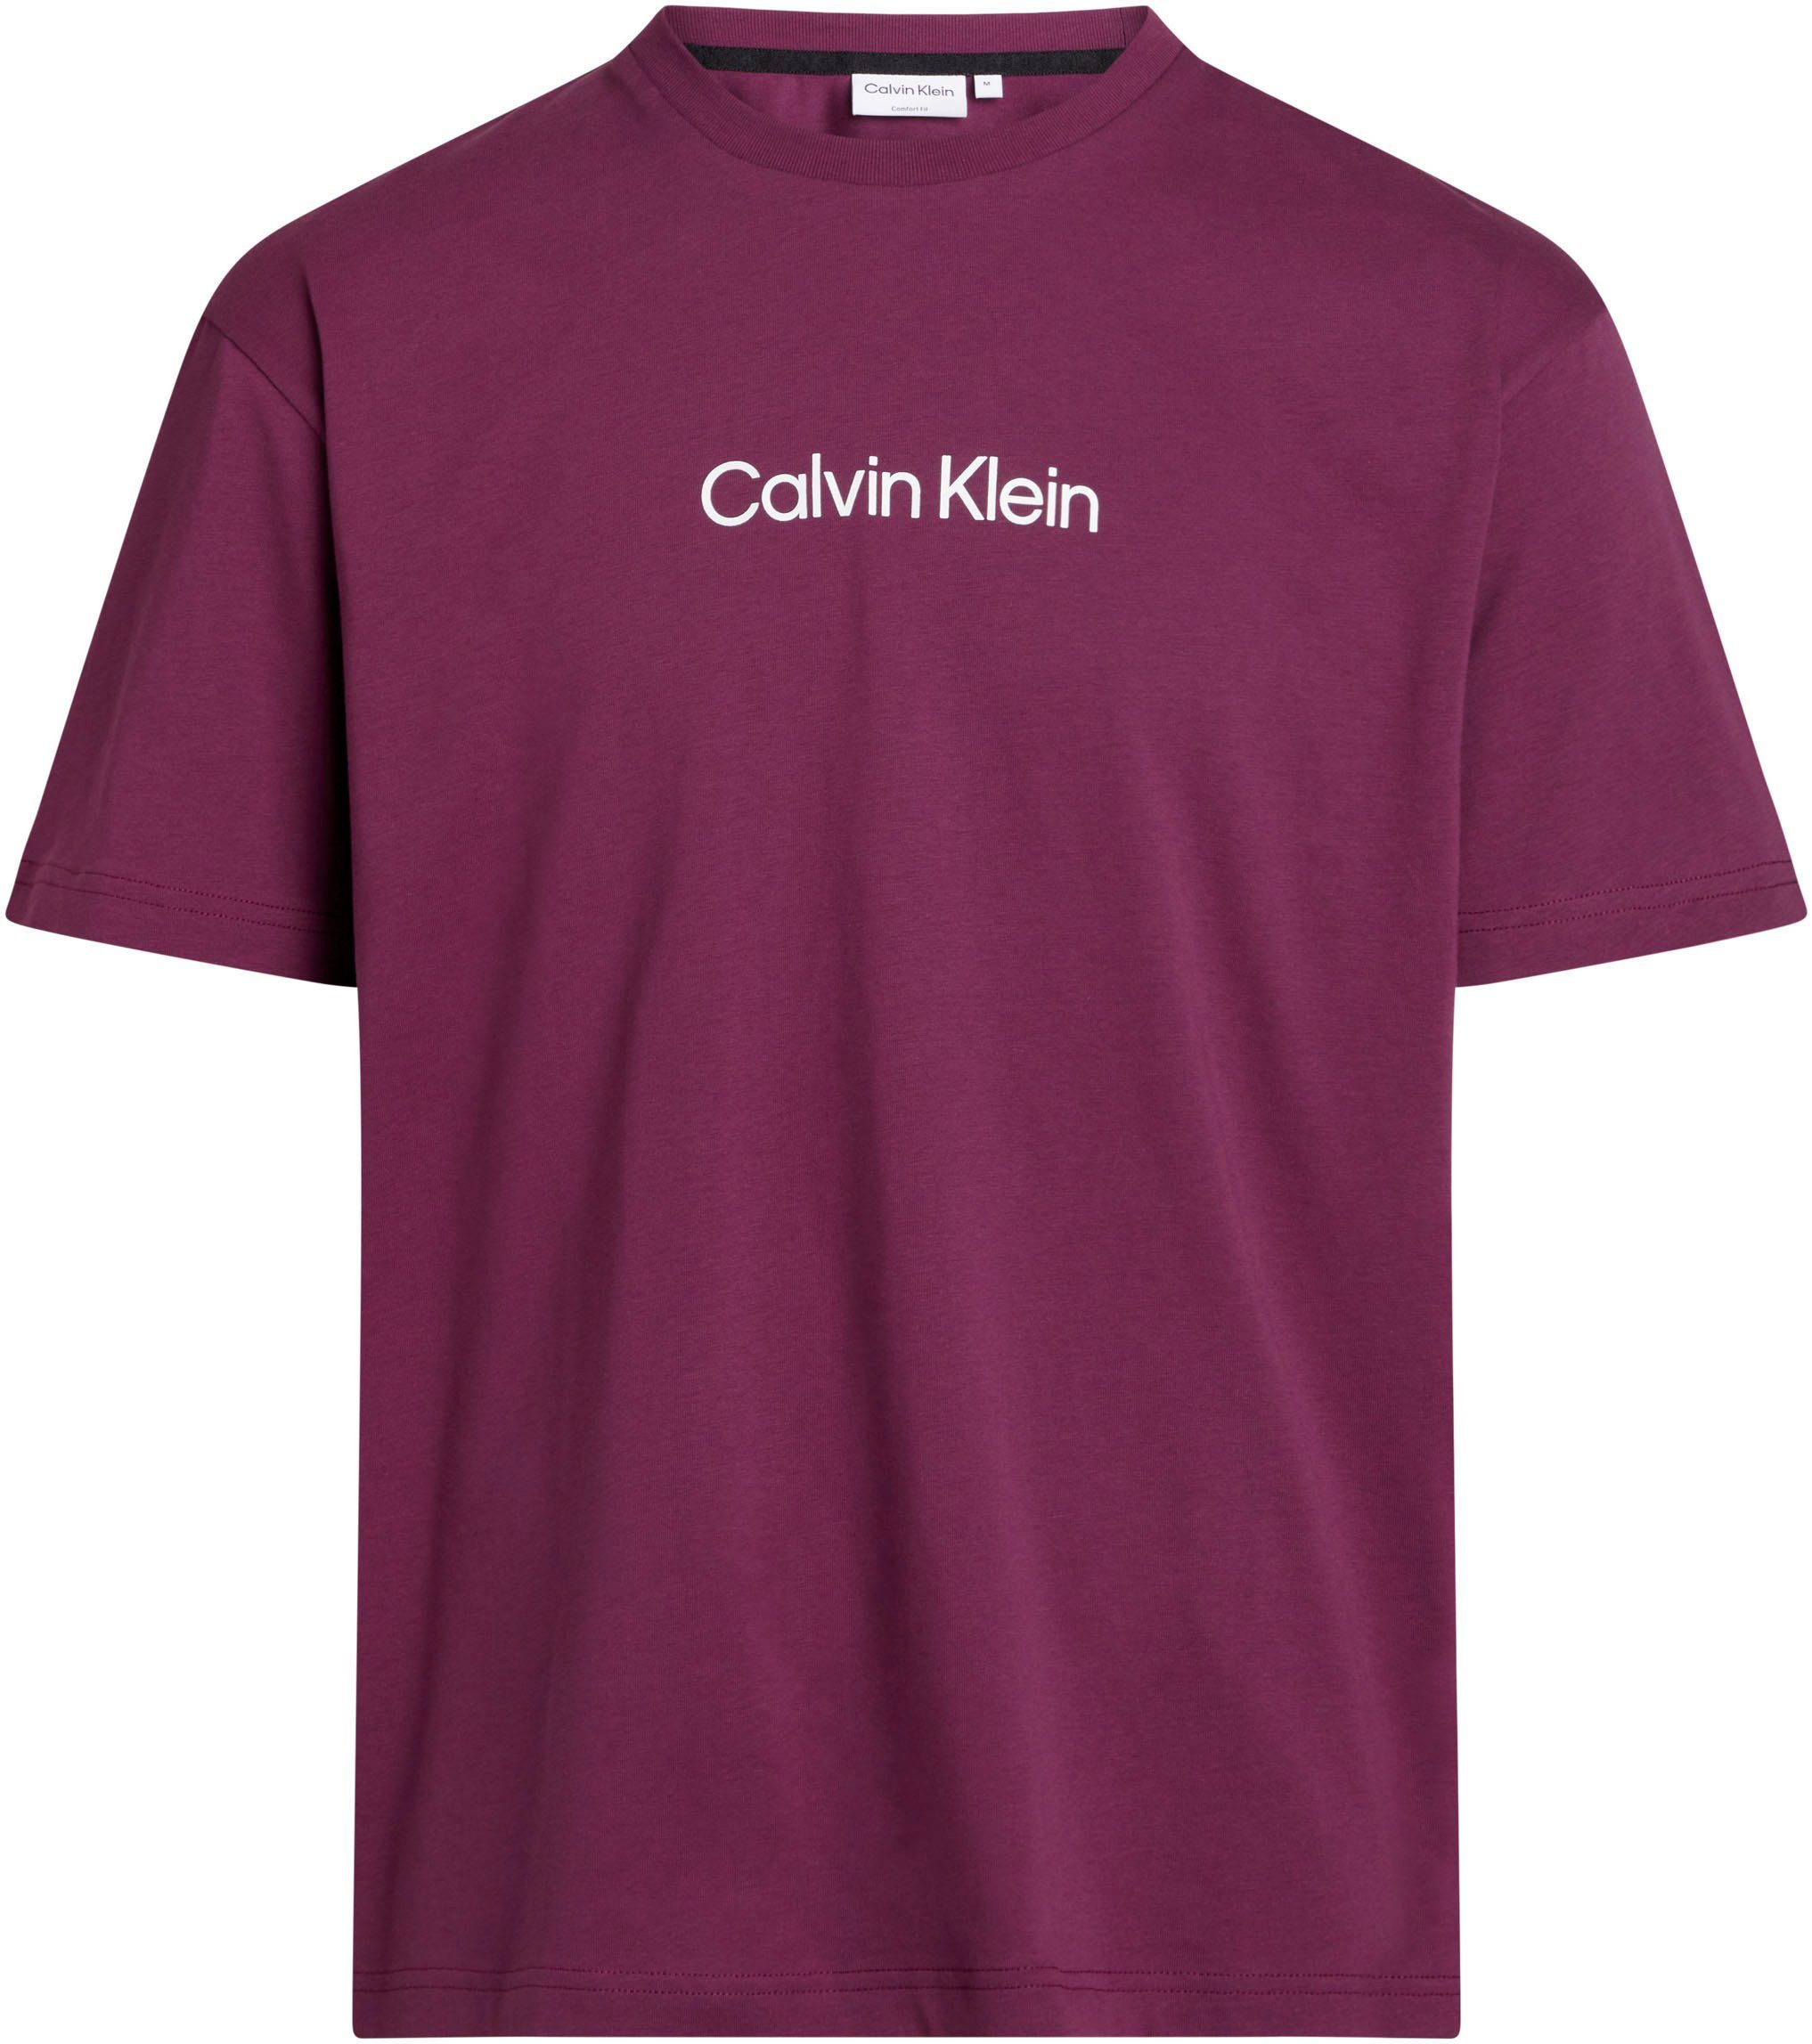 Calvin Klein T-Shirt Plum HERO COMFORT aufgedrucktem Italian T-SHIRT LOGO Markenlabel mit